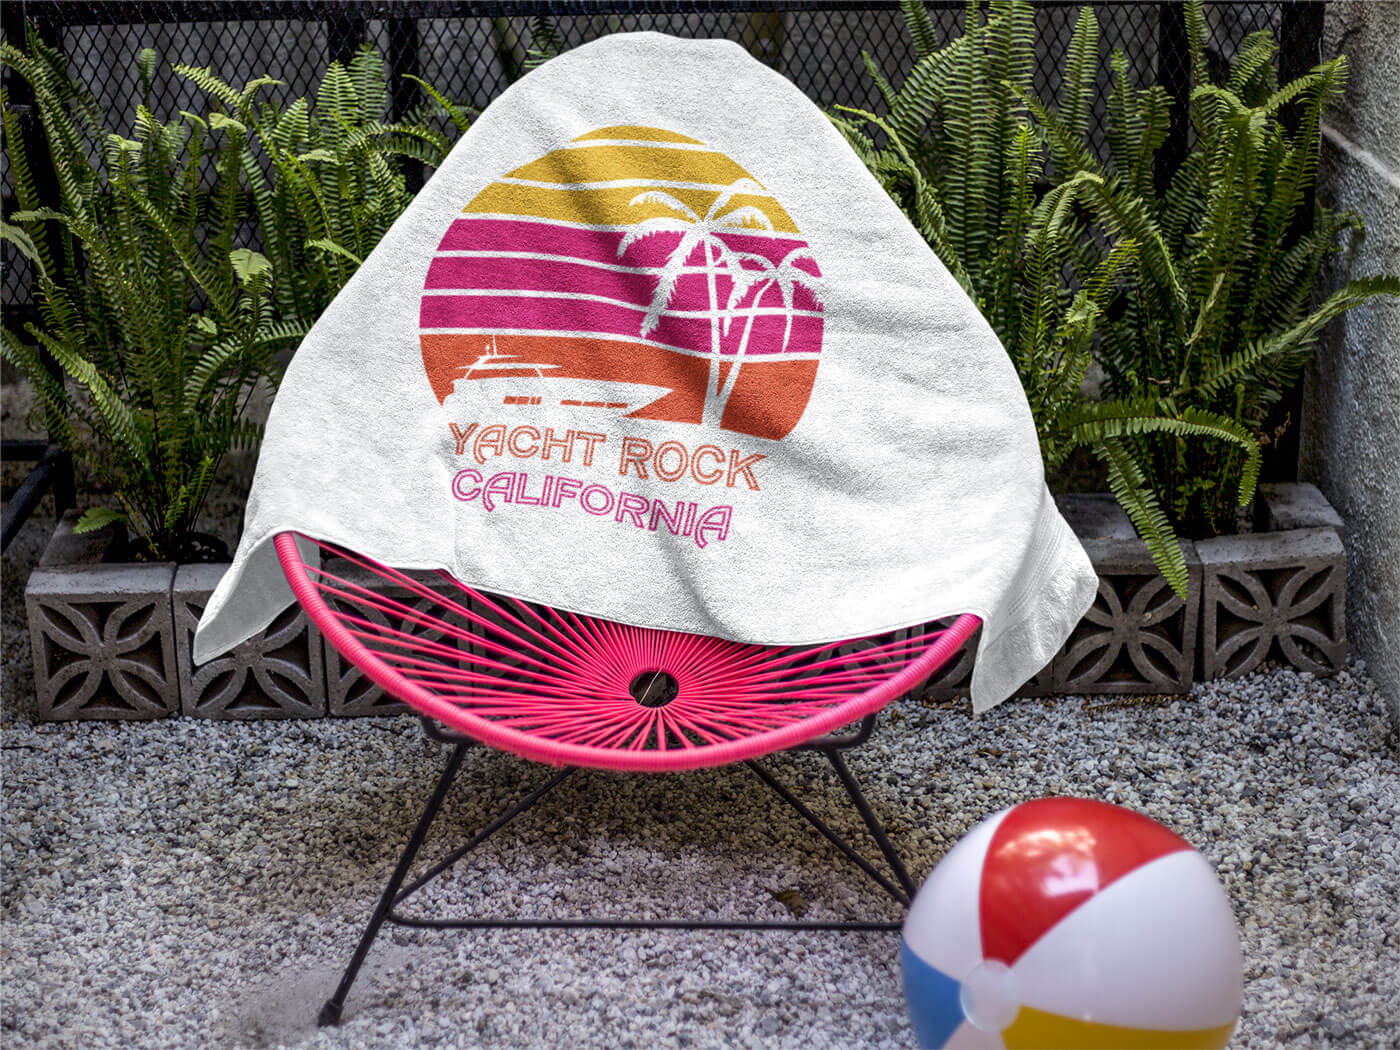 A Yacht Rock California style beach towel sitting on an outside papasan chair.